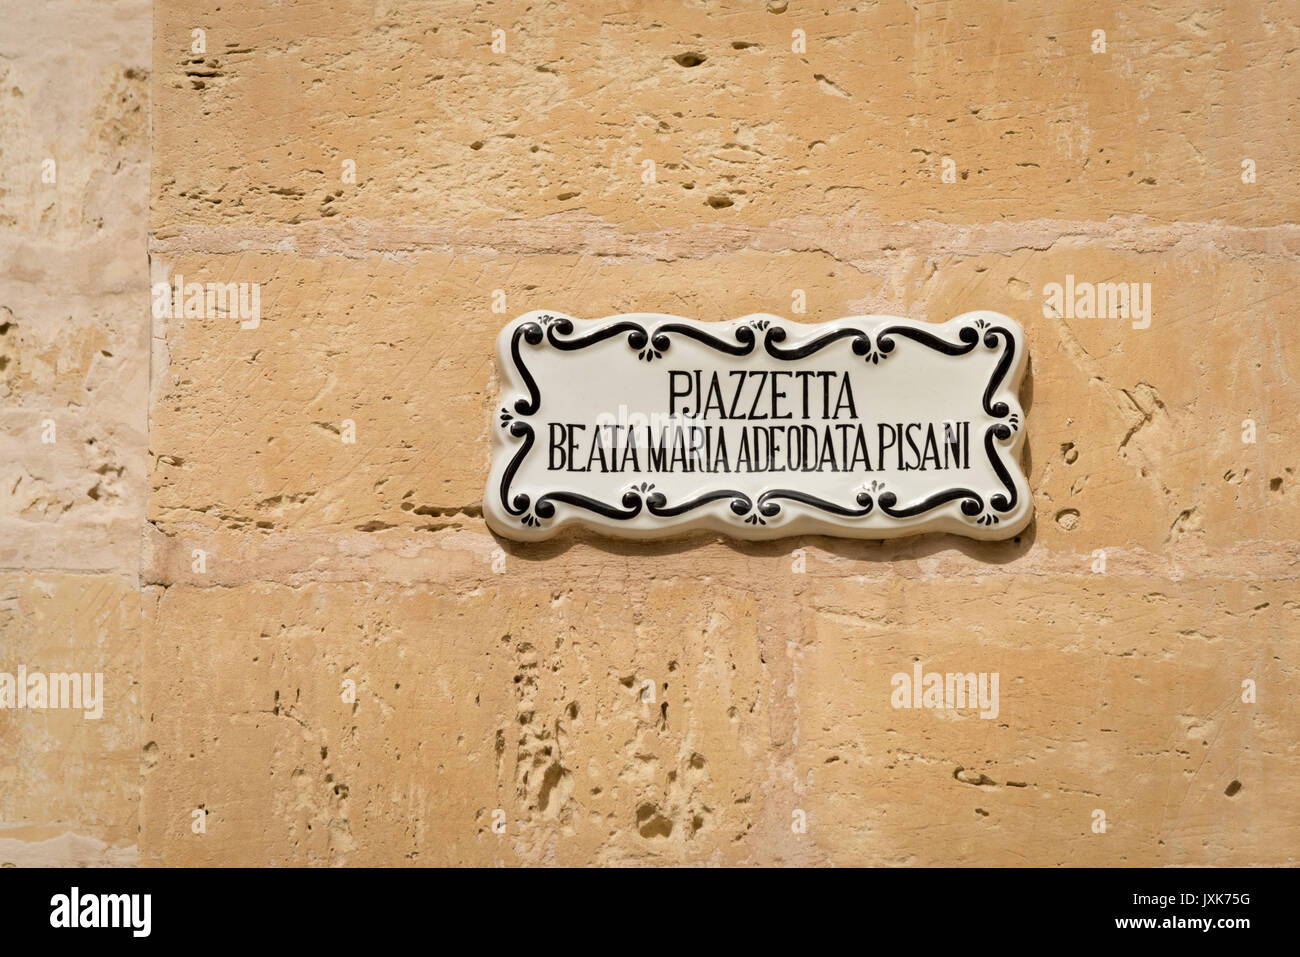 A ceramic street sign on a wall in the old town of Mdina Malta  for Pjazzetta Beata Maria Adedata Pisani Stock Photo